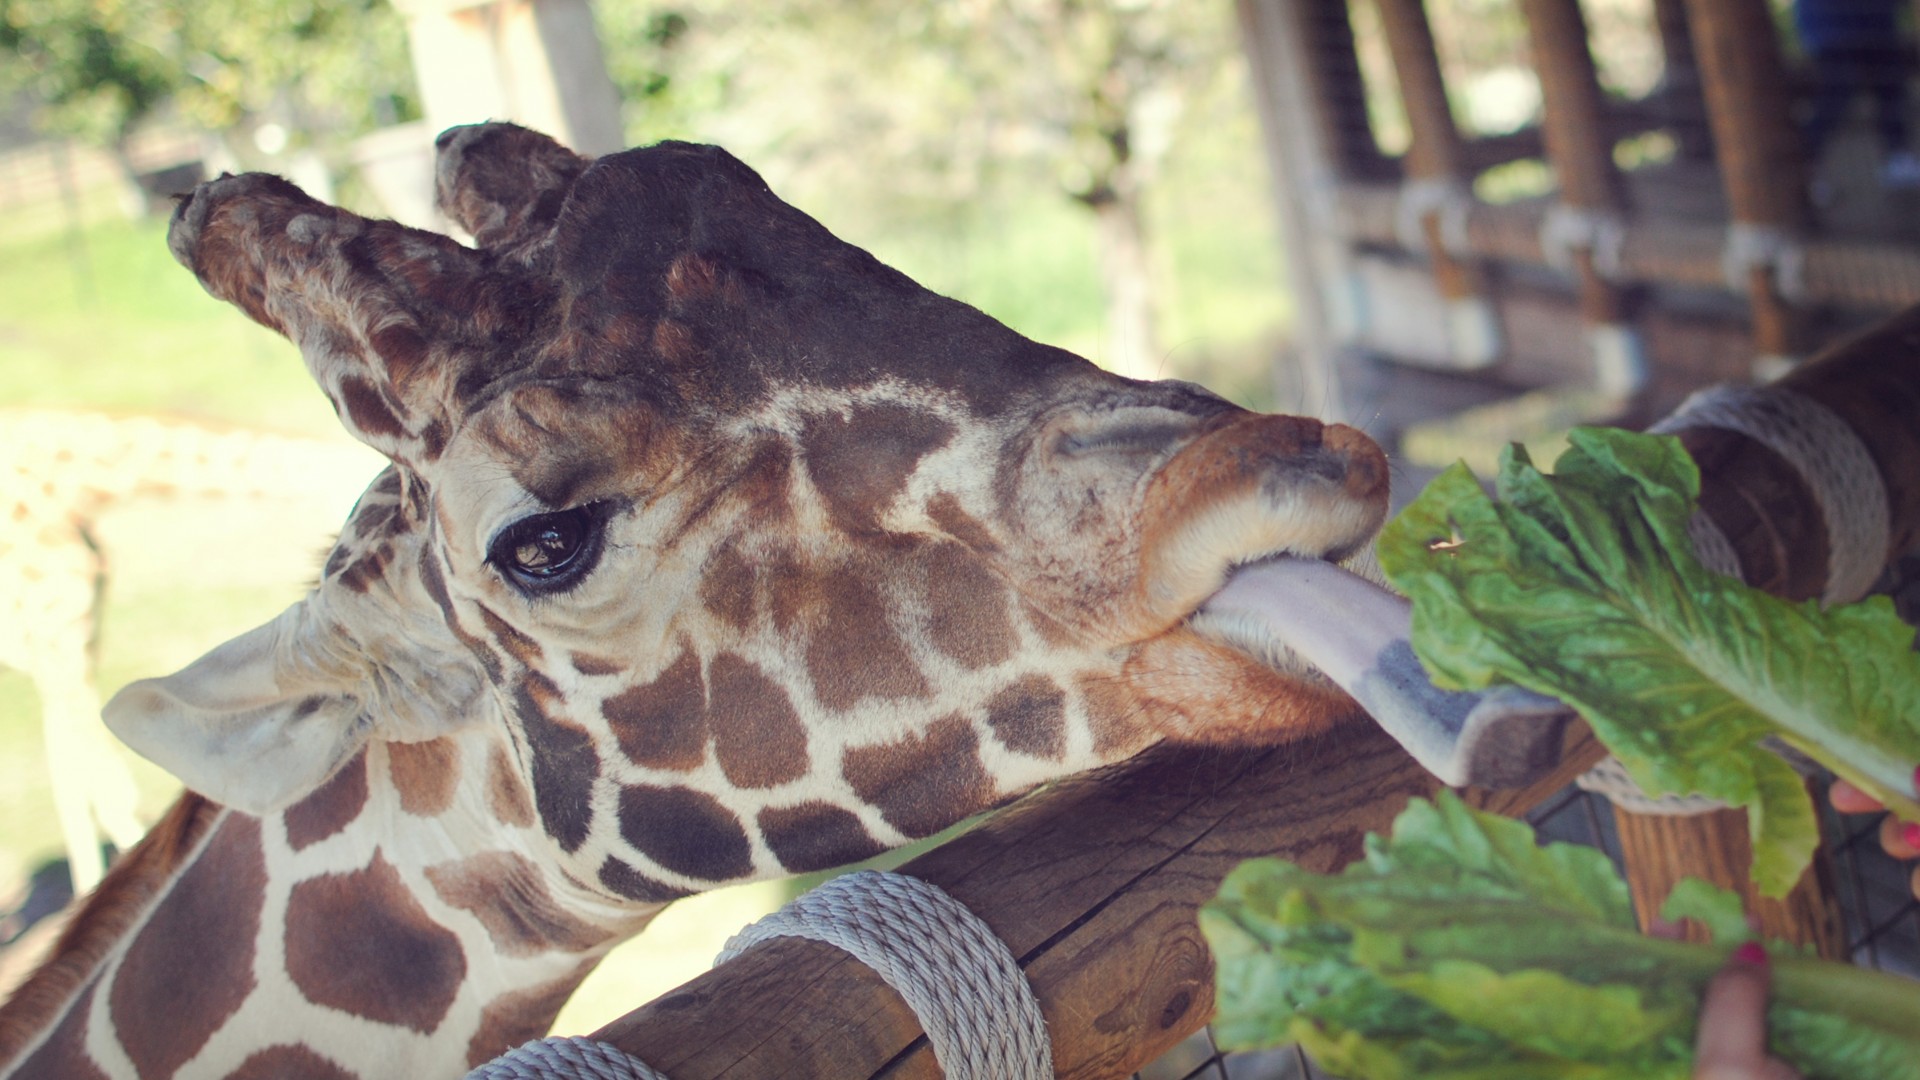 Giraffe, Jacksonville Zoo, animal, tourism, nature, close-up (horizontal)